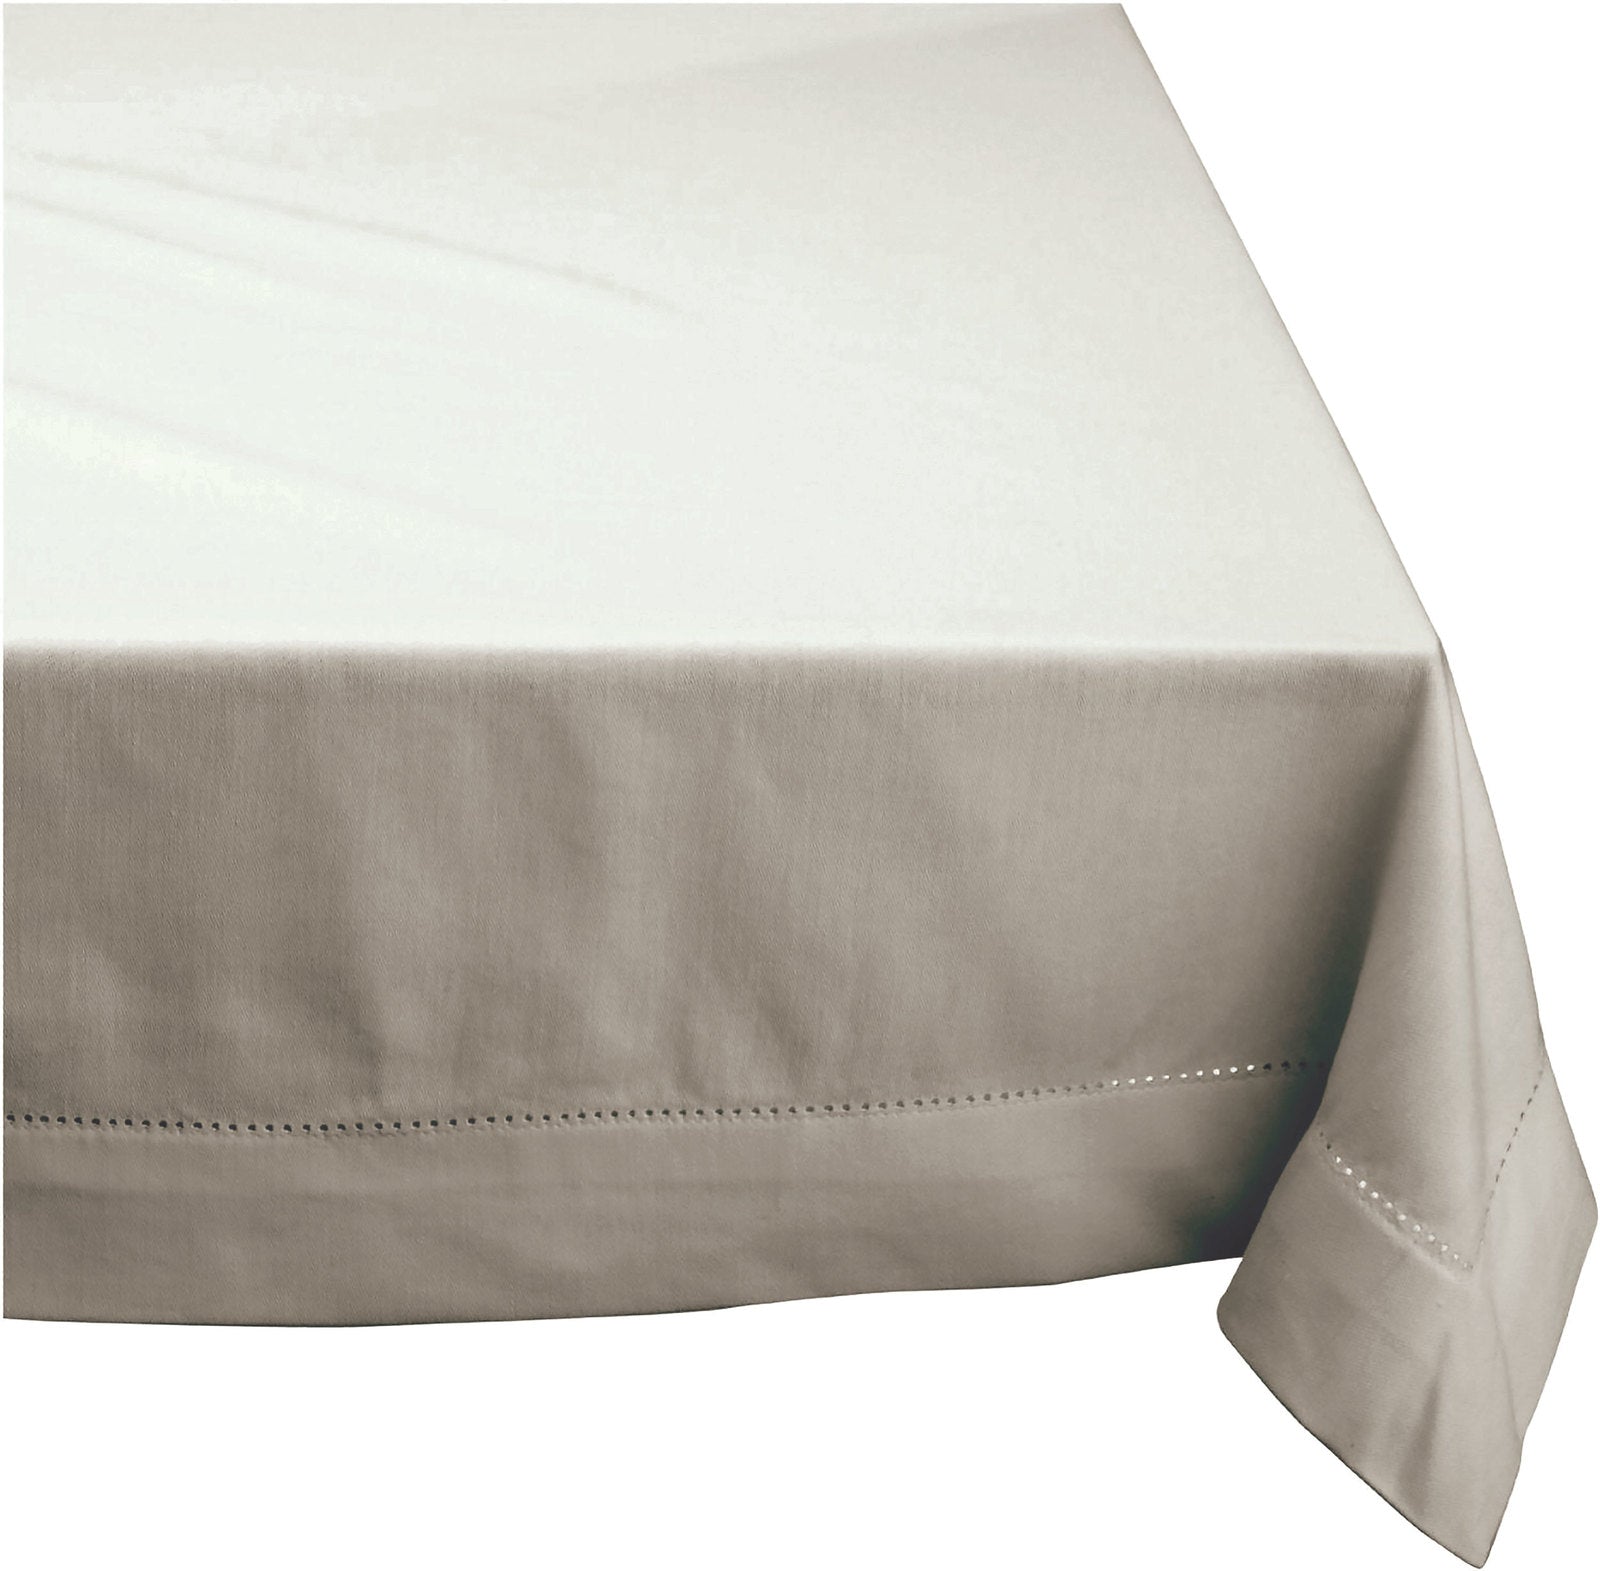 Elegant Hemstitch Tablecloth - 100% Cotton - 130x180cm in White